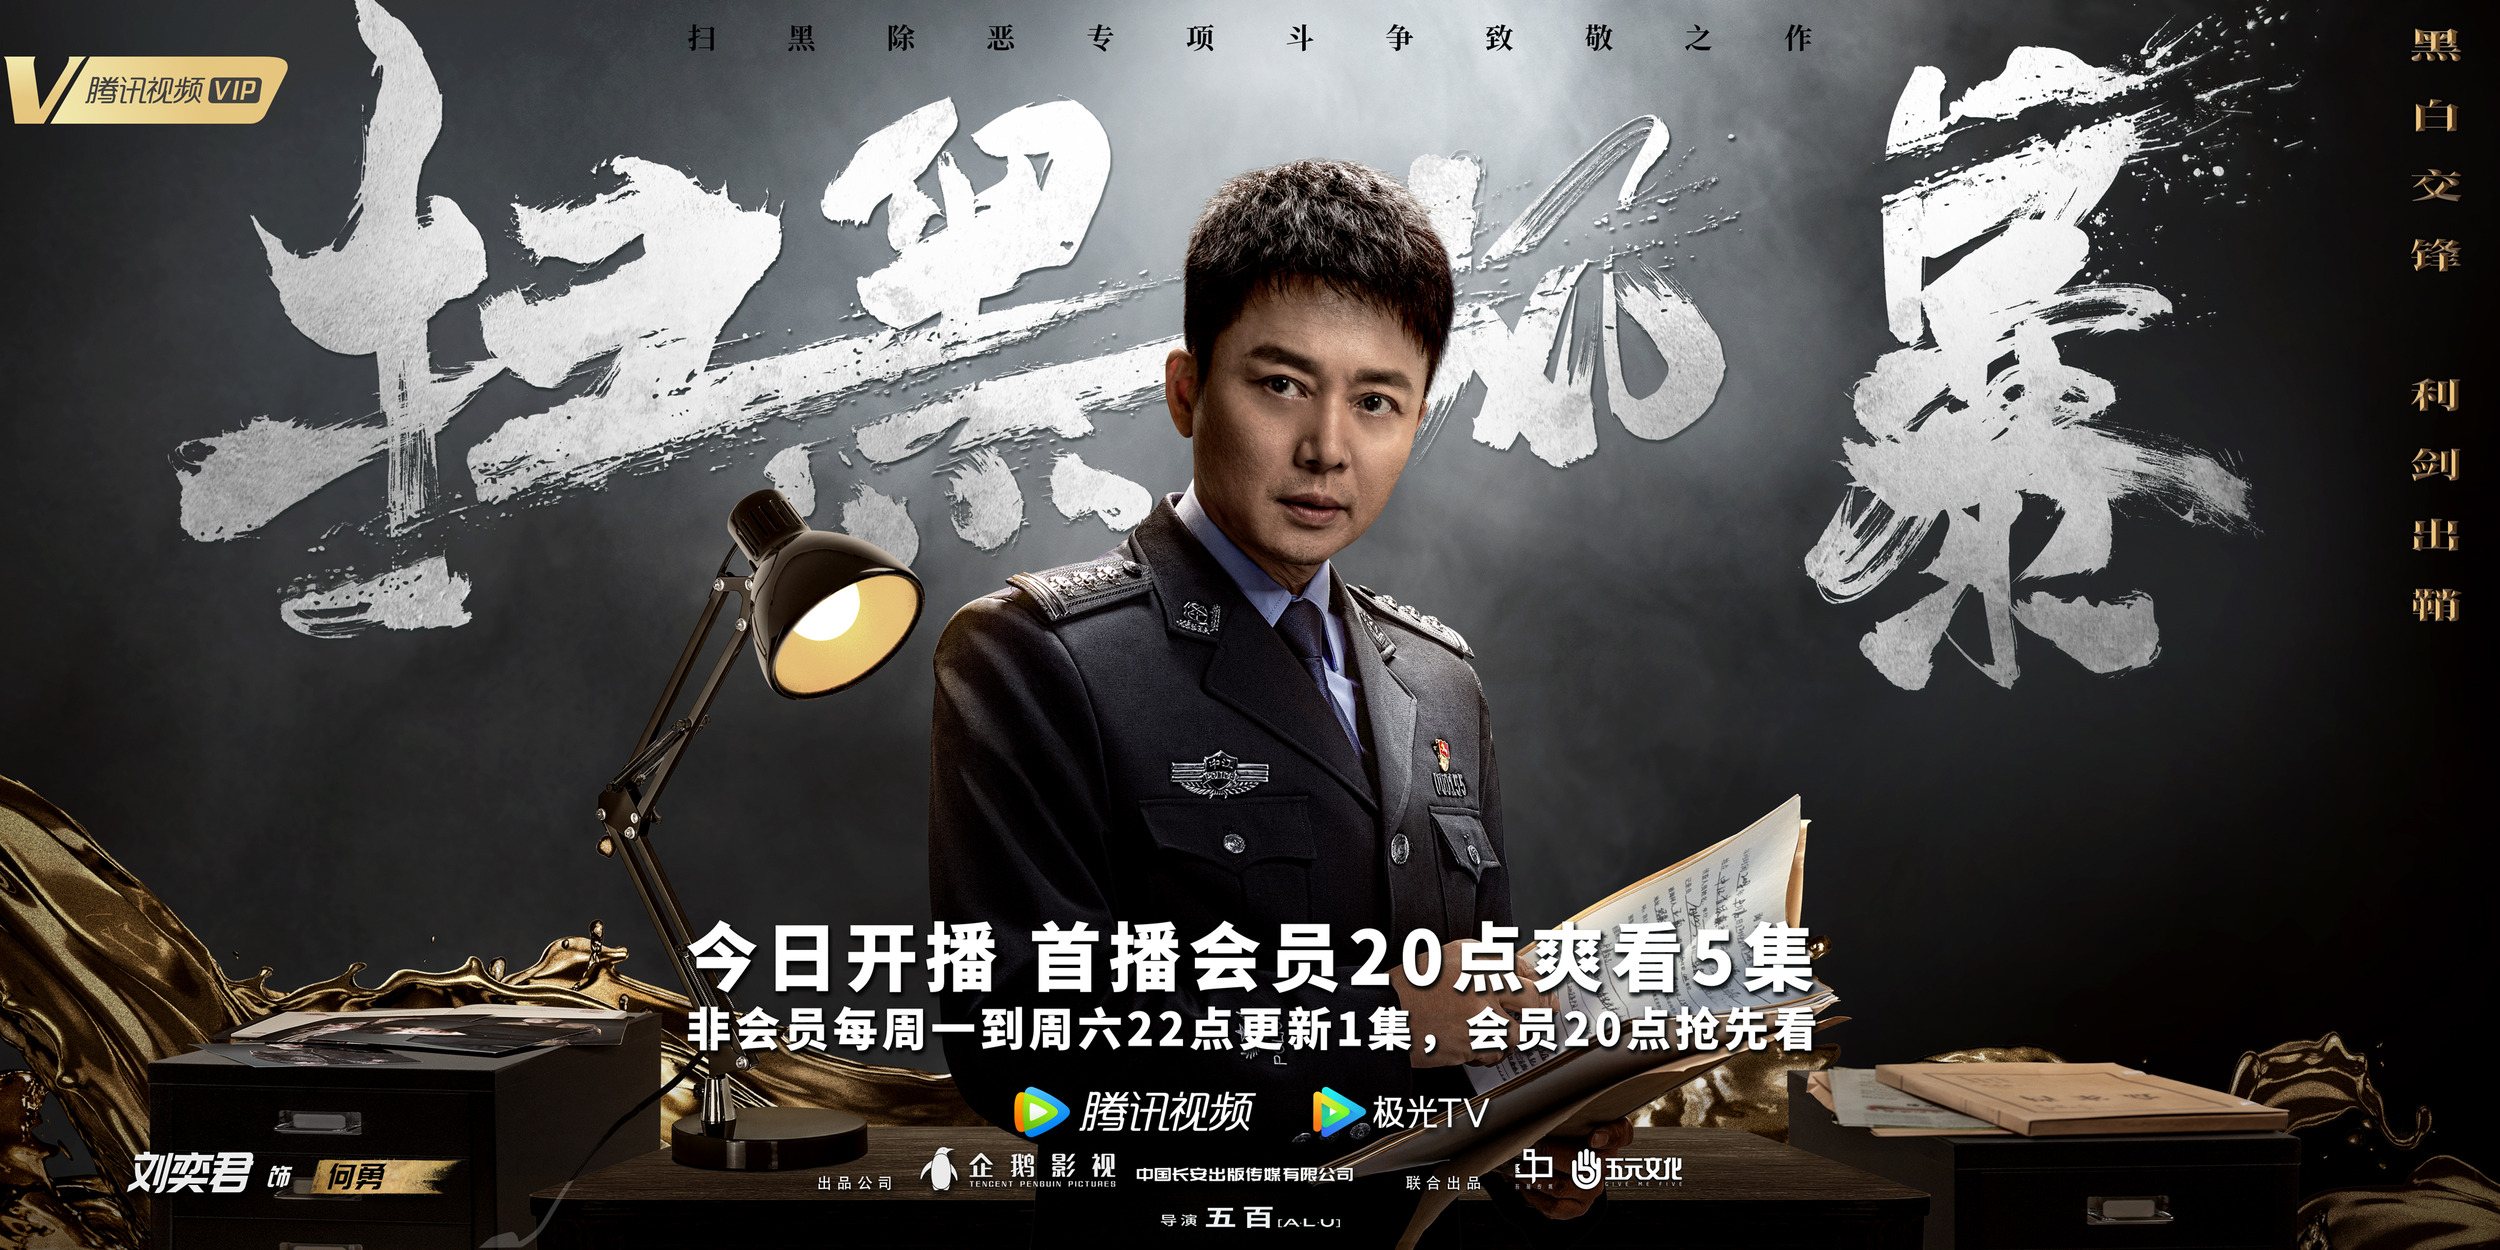 Mega Sized TV Poster Image for Sao hei feng bao (#5 of 9)